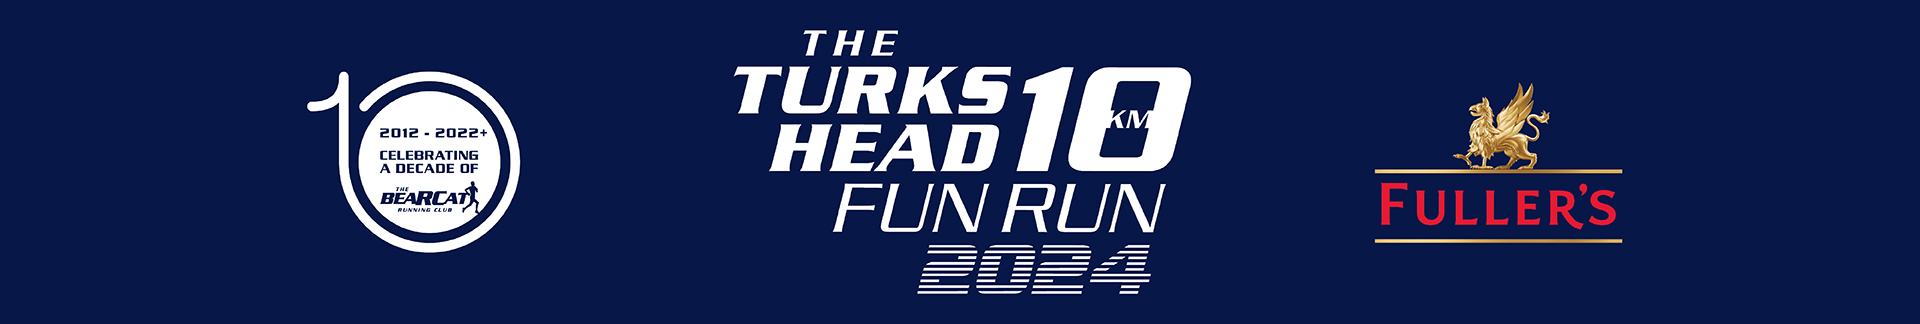 The Turks Head 10